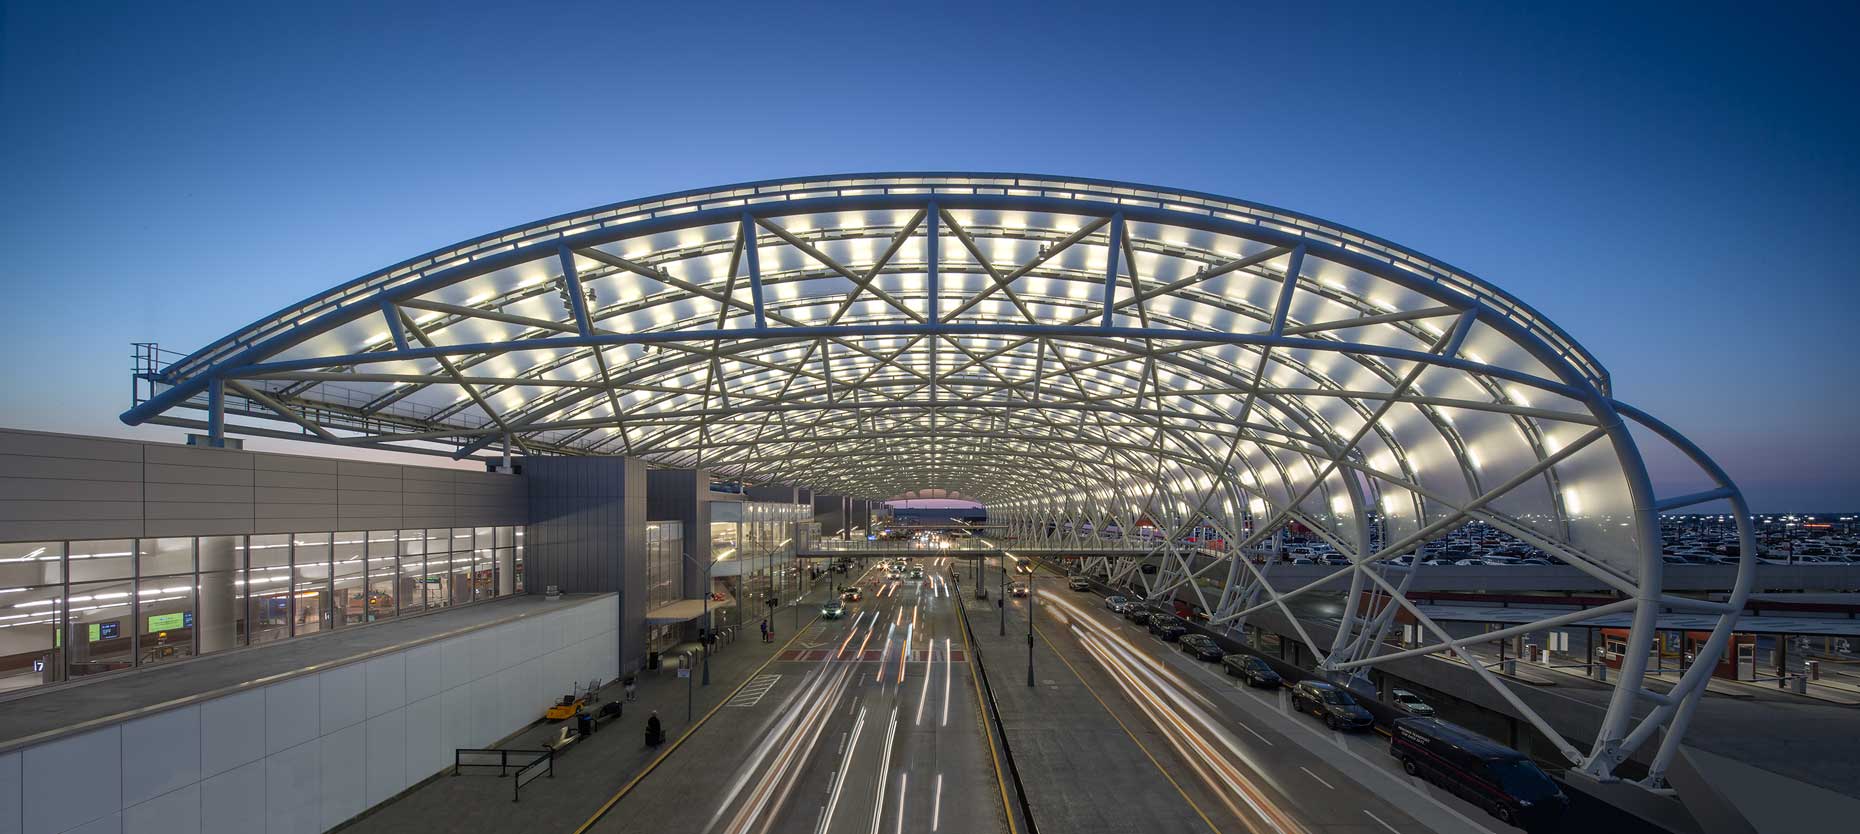 The canopy at Hartsfield Jackson Atlanta International Airport glows against a dawn sky